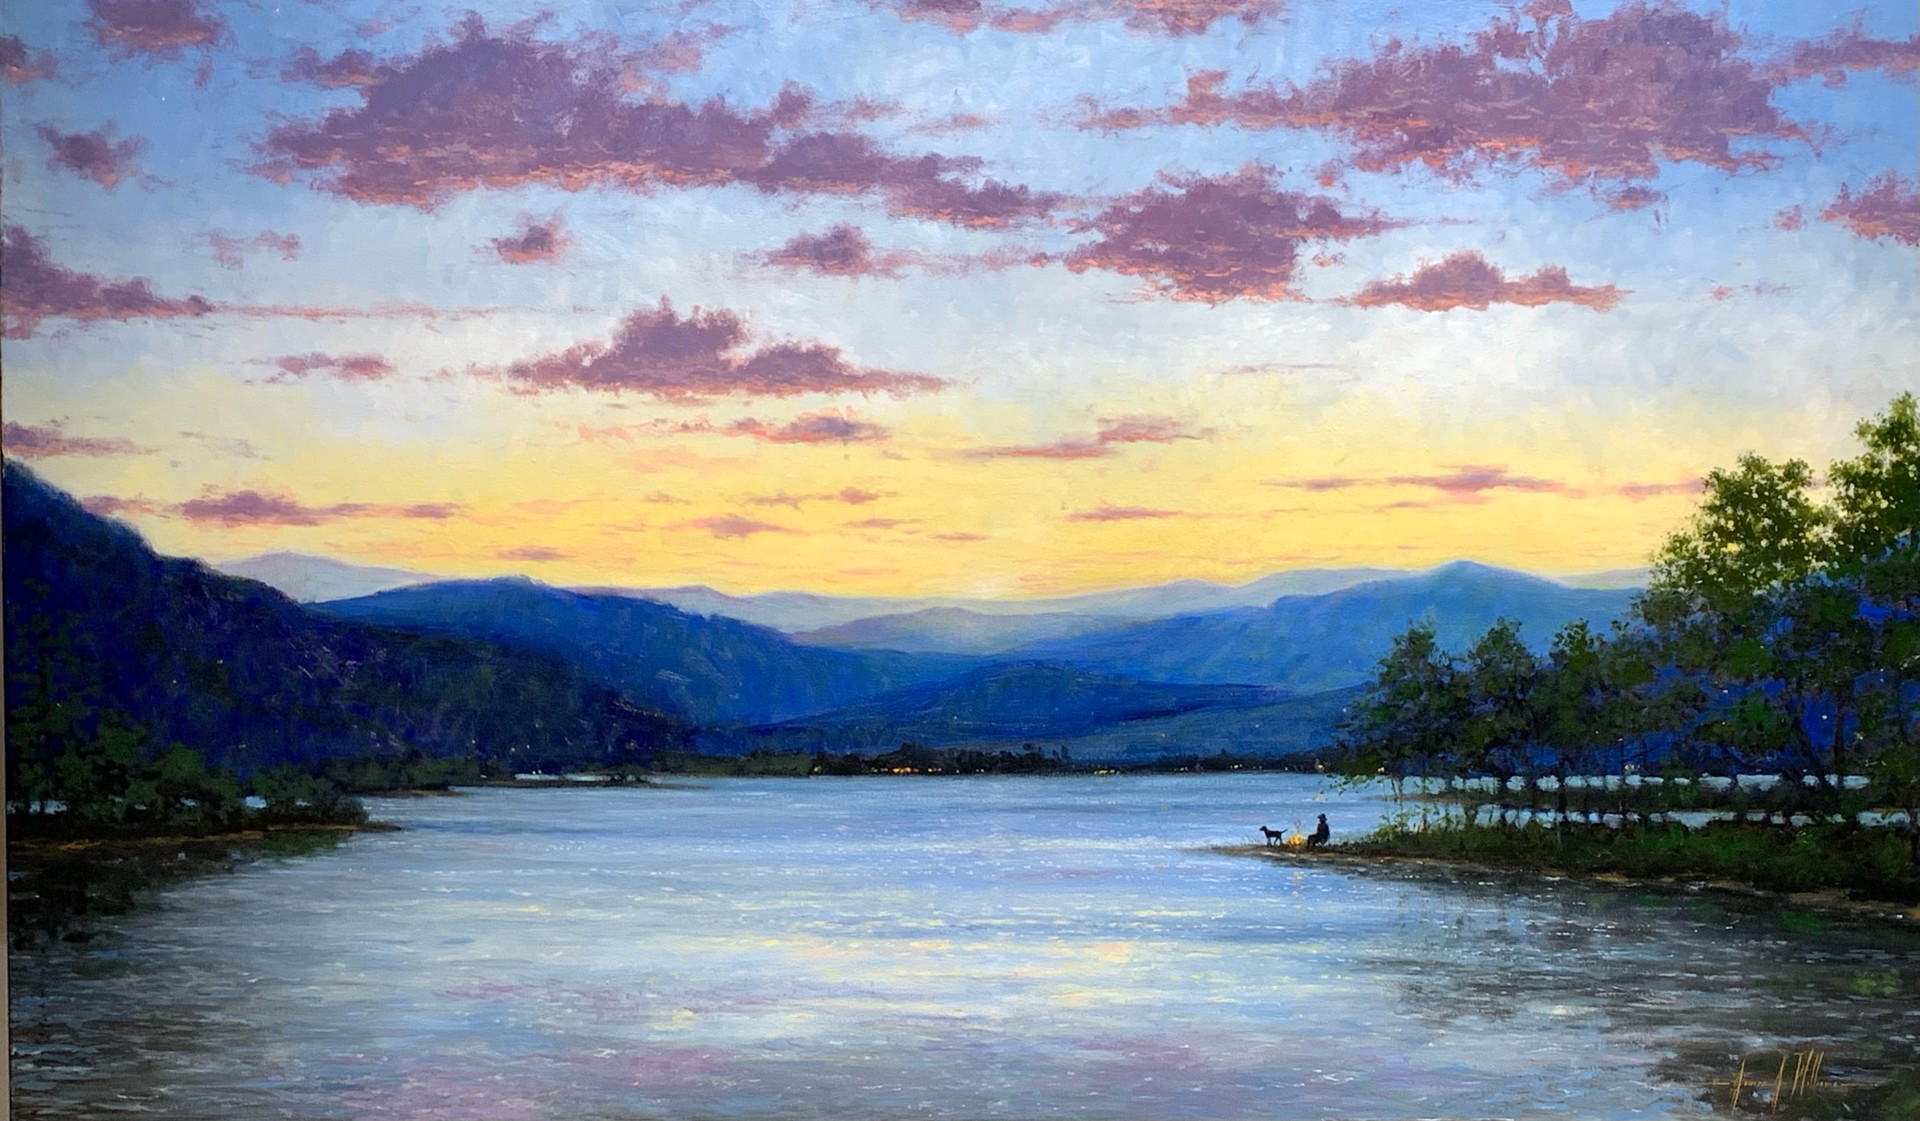 Sunset on Blue Ridge Lake by James J. Williams